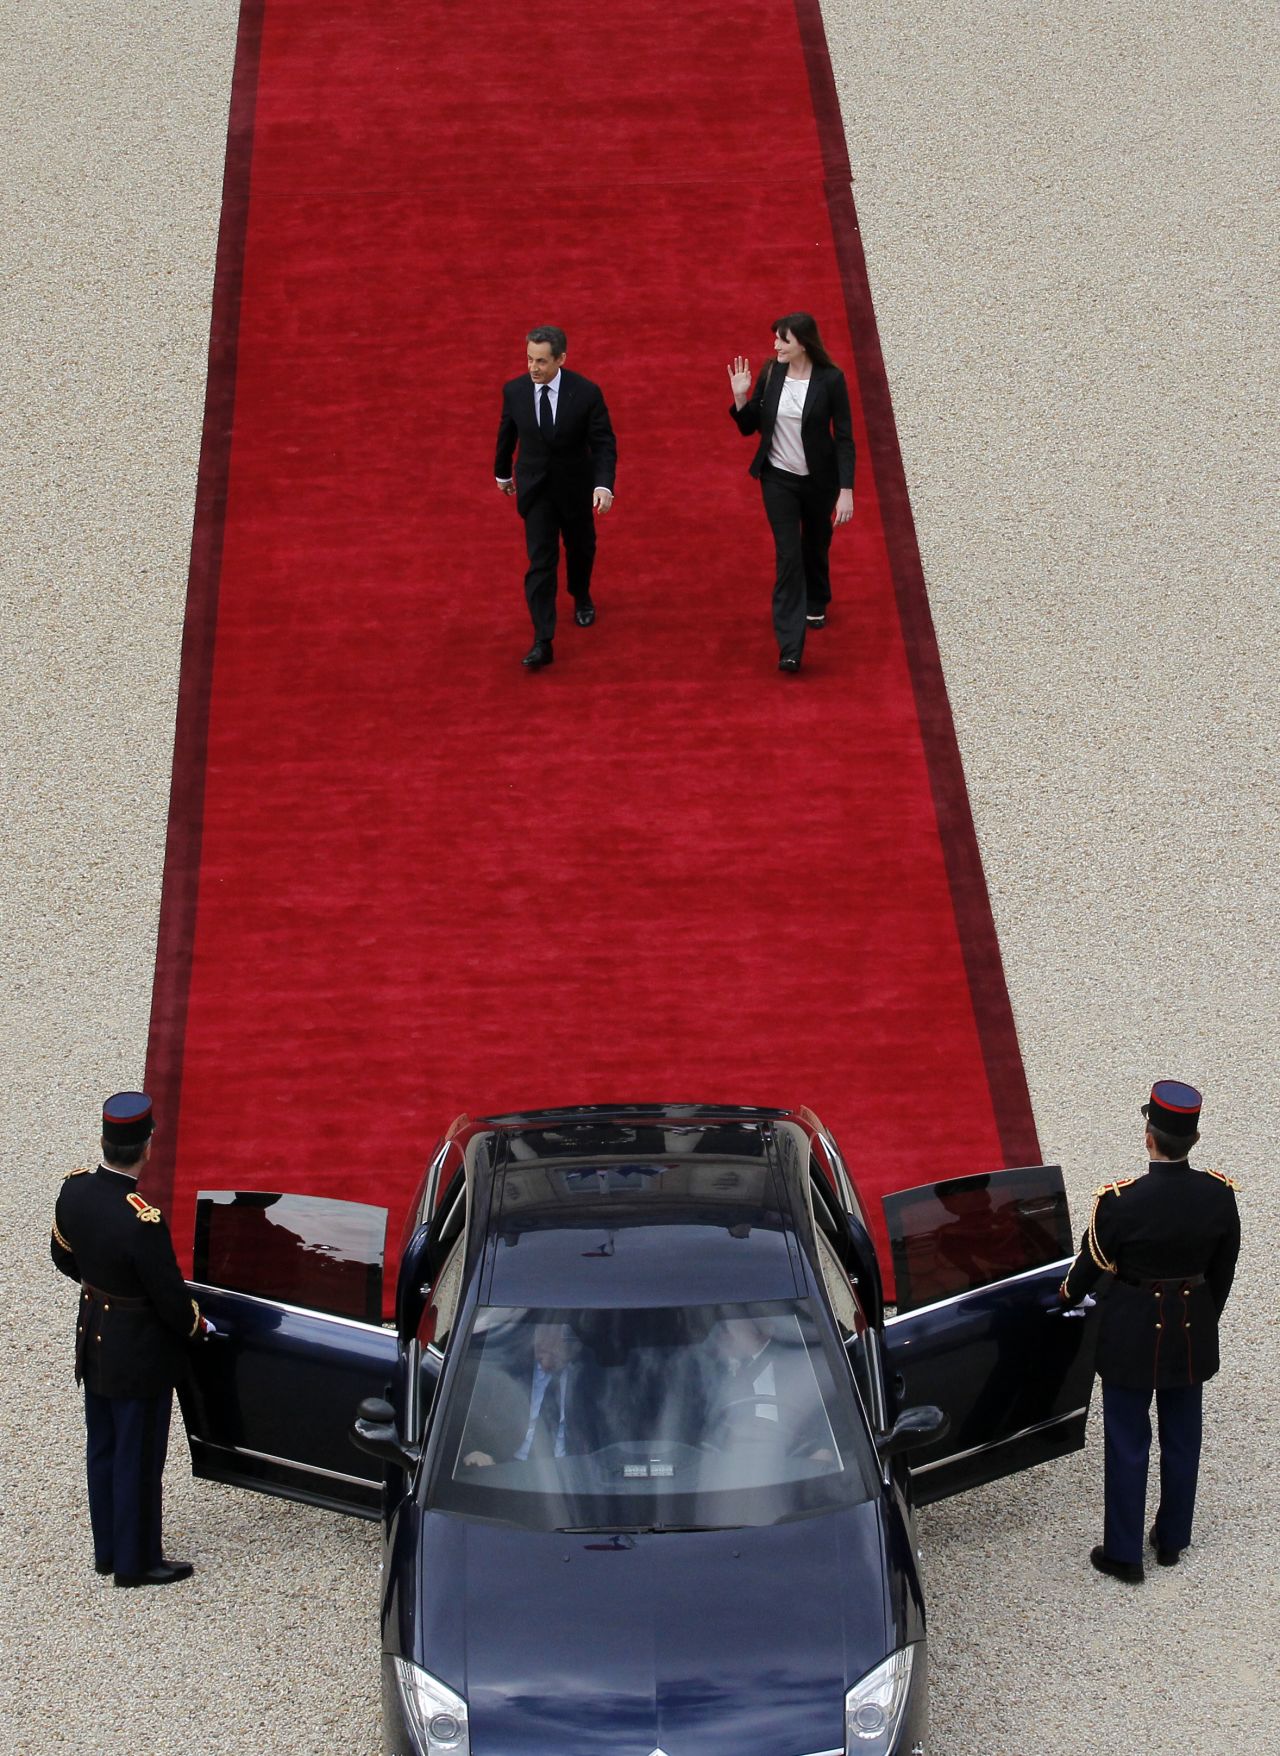 Sarkozy and his wife, Carla Bruni-Sarkozy, leave the Élysée Palace.